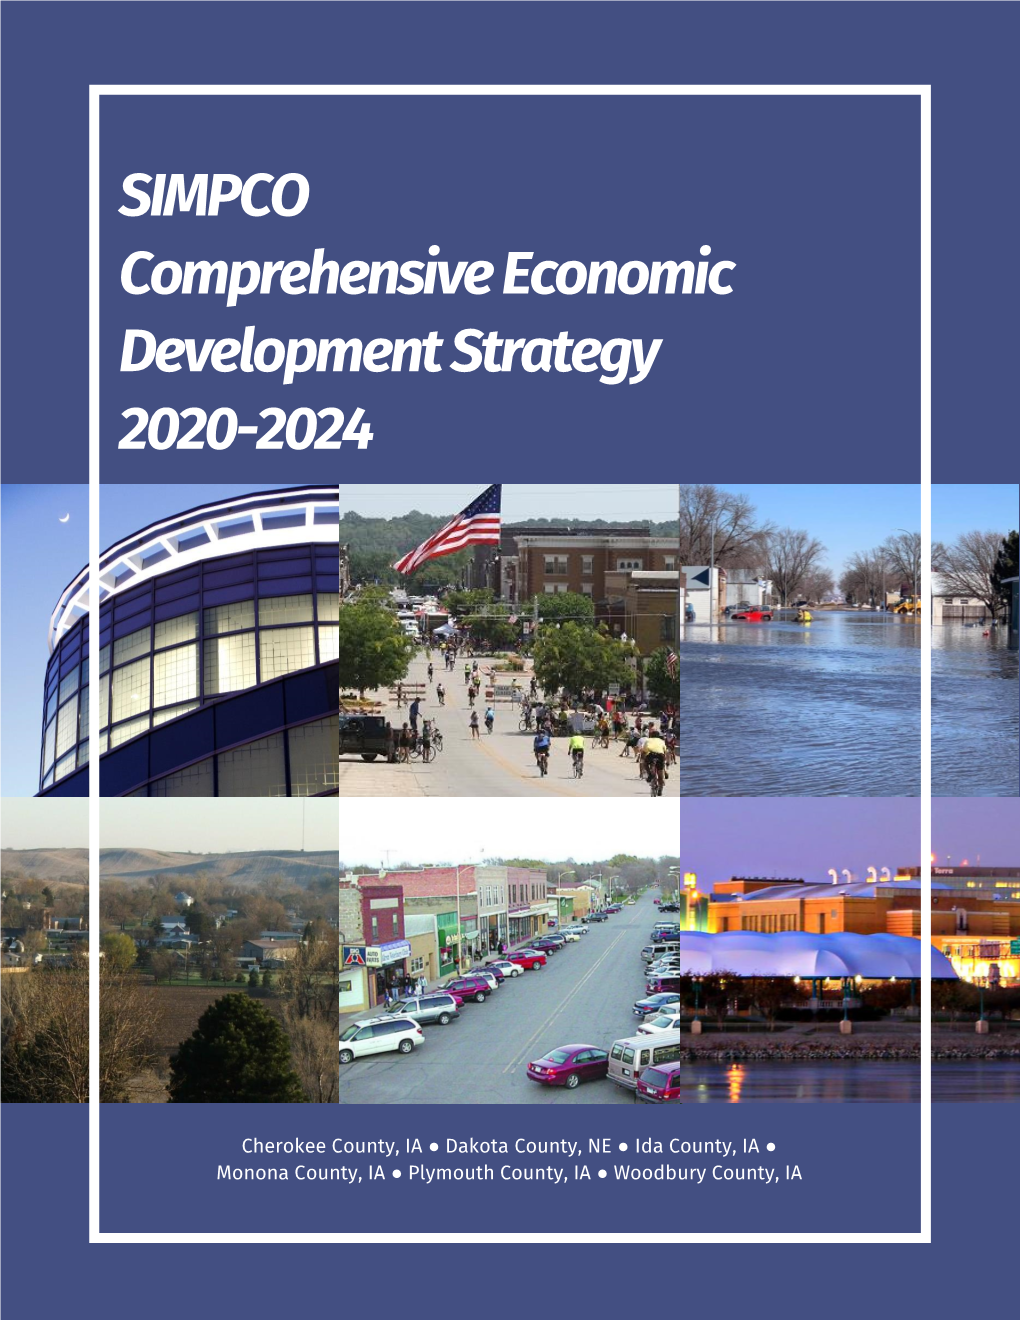 Comprehensive Economic Development Strategy (CEDS) 2020-2024